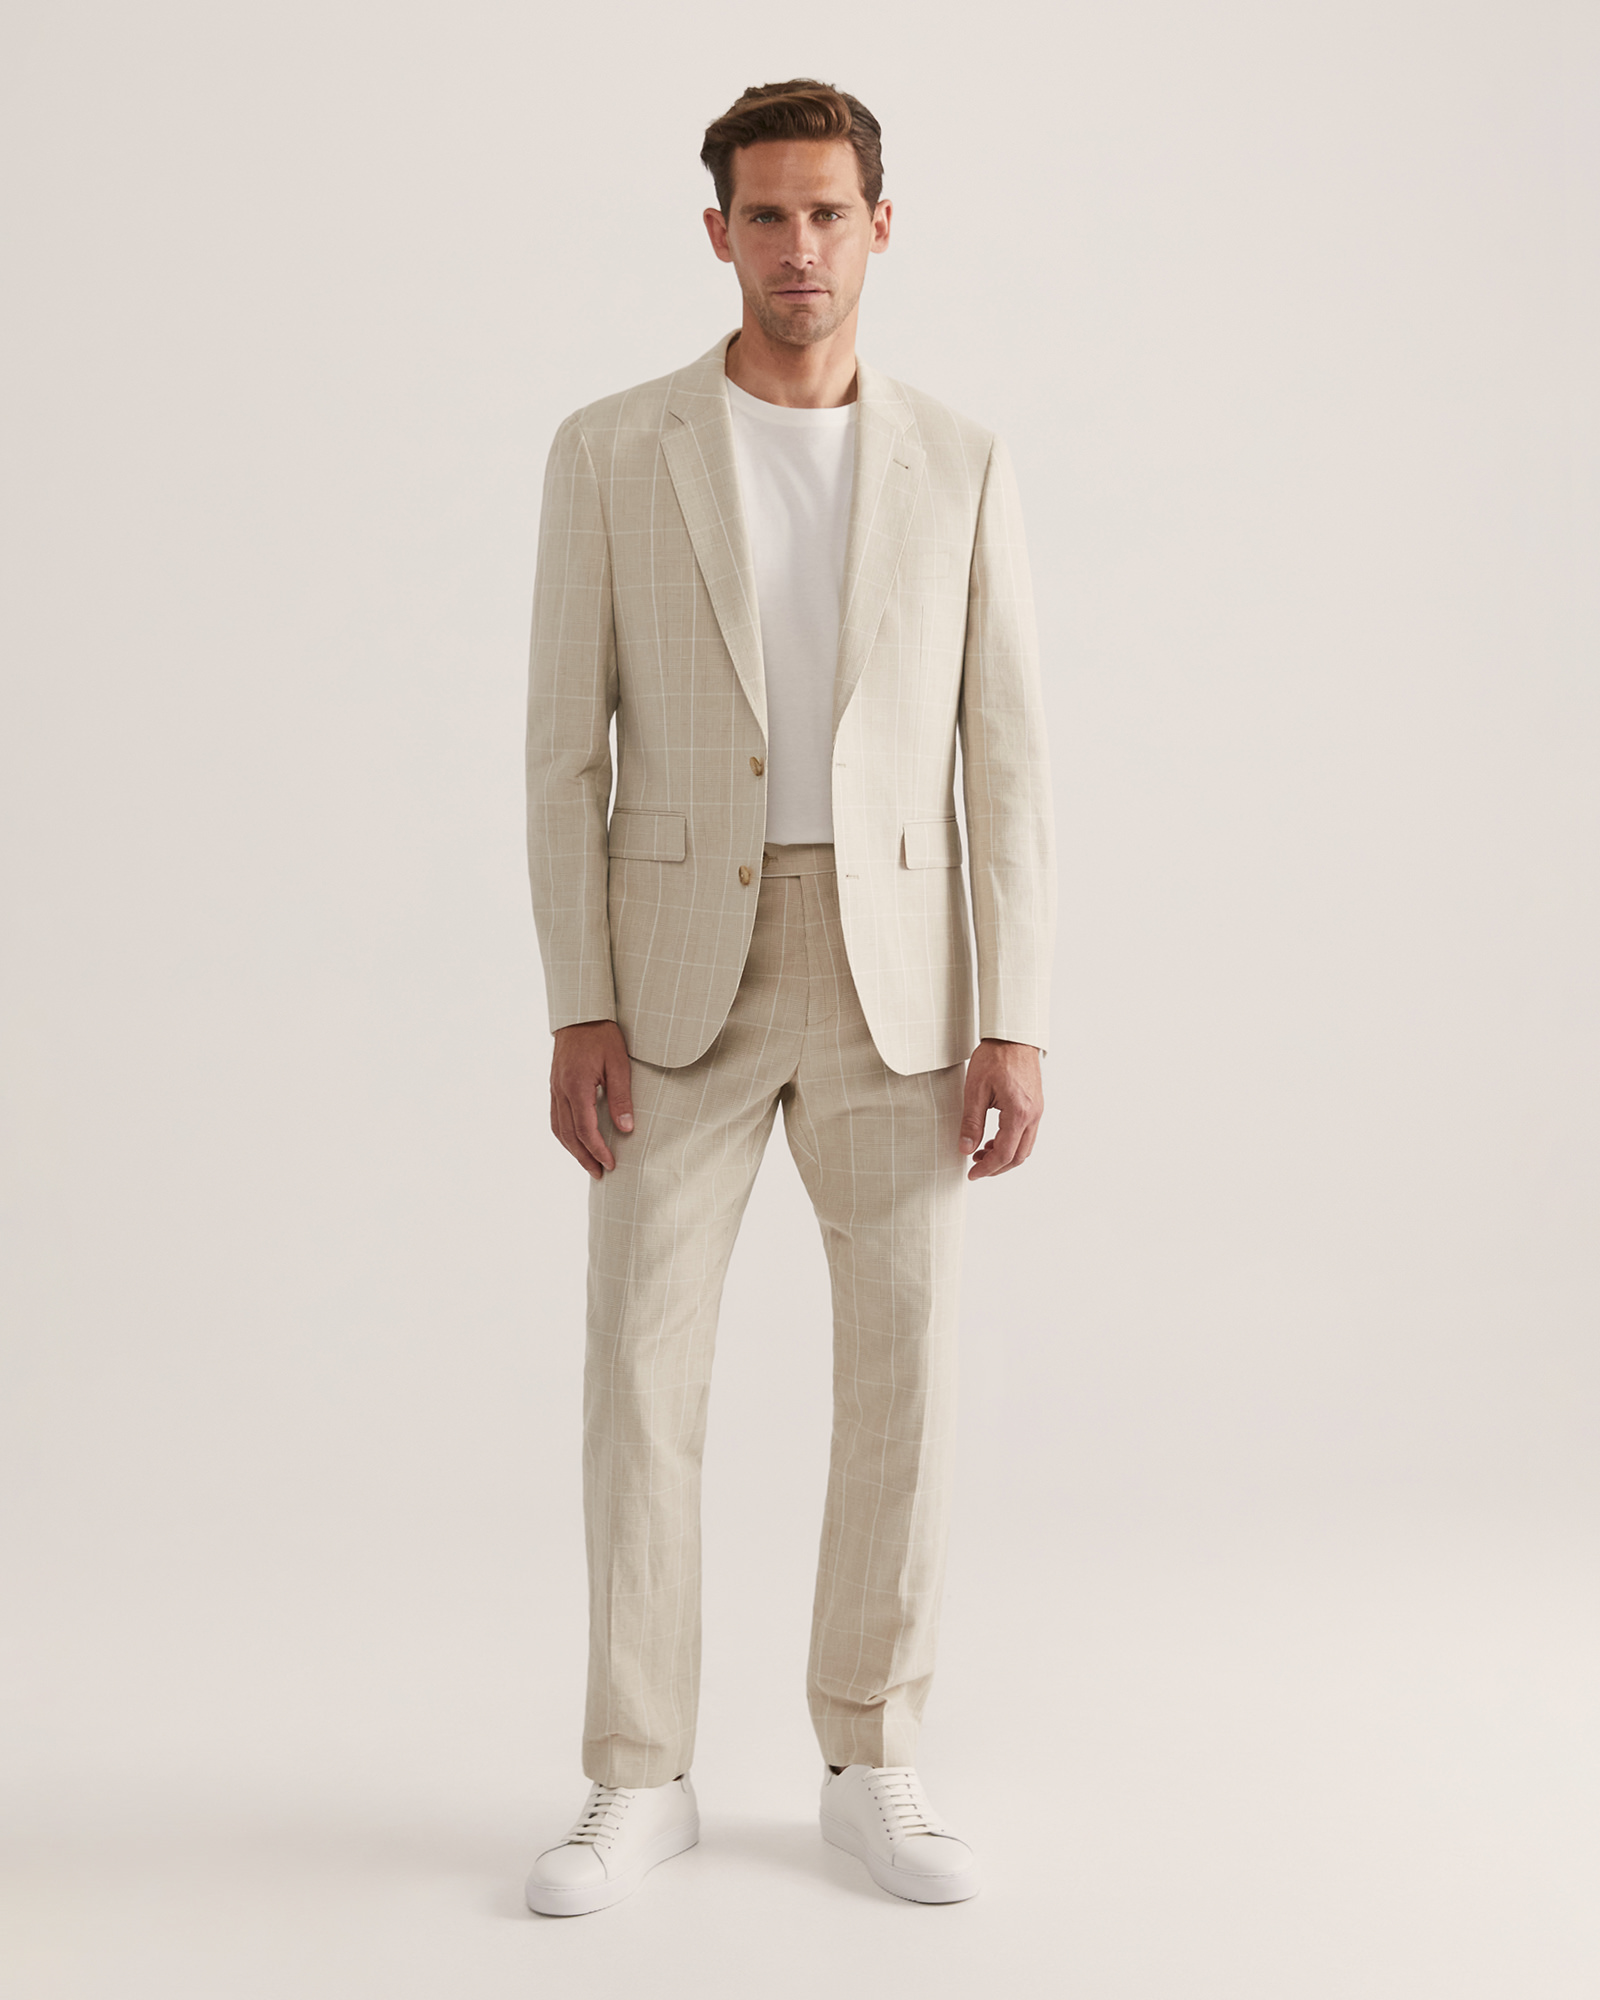 Selected Homme slim tapered suit pants in beige